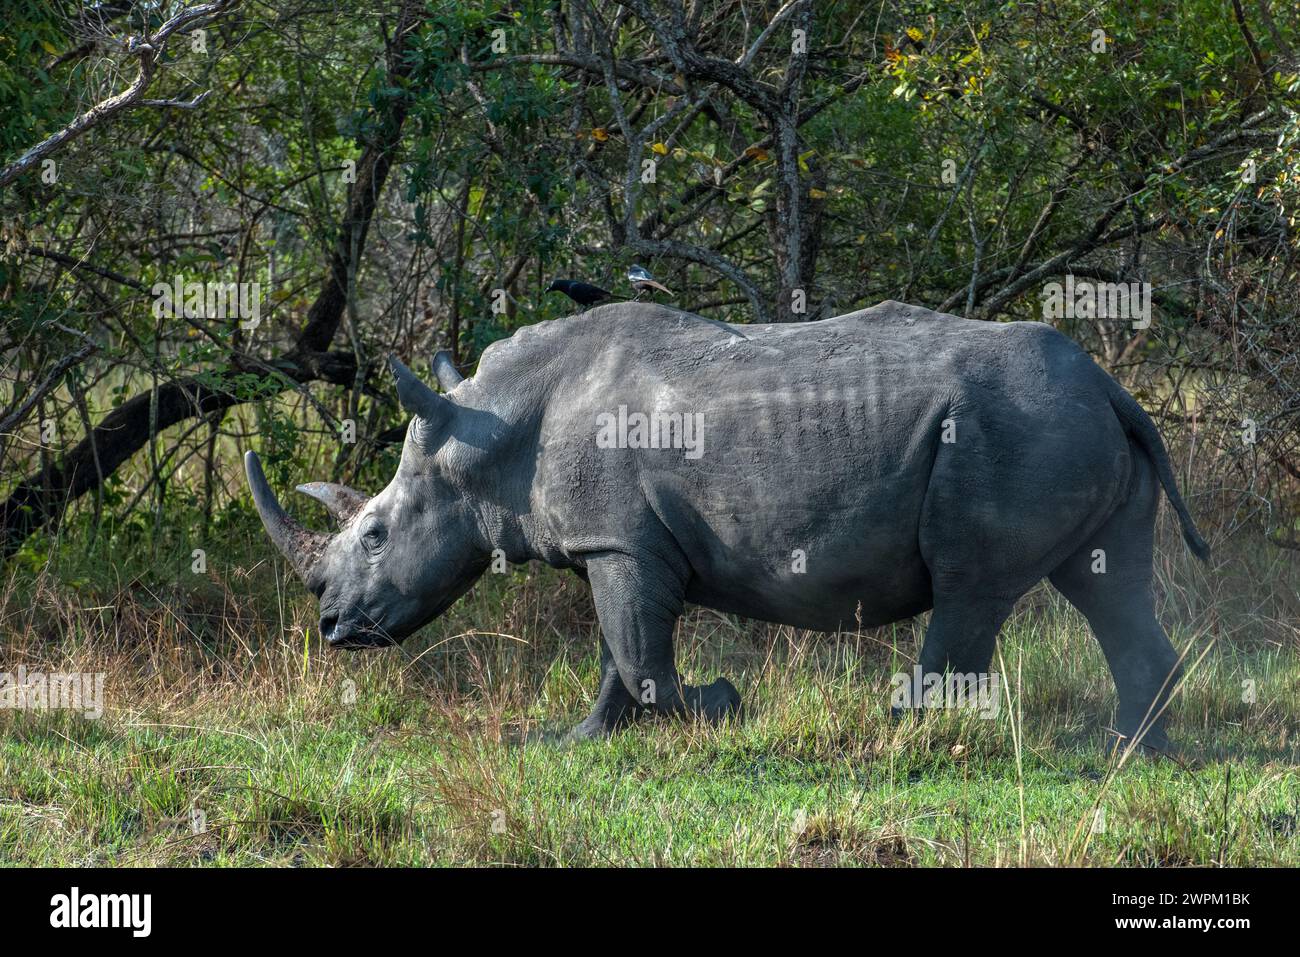 Rhinoceros at Ziwa Rhino Sanctuary, Uganda, East Africa, Africa Stock Photo